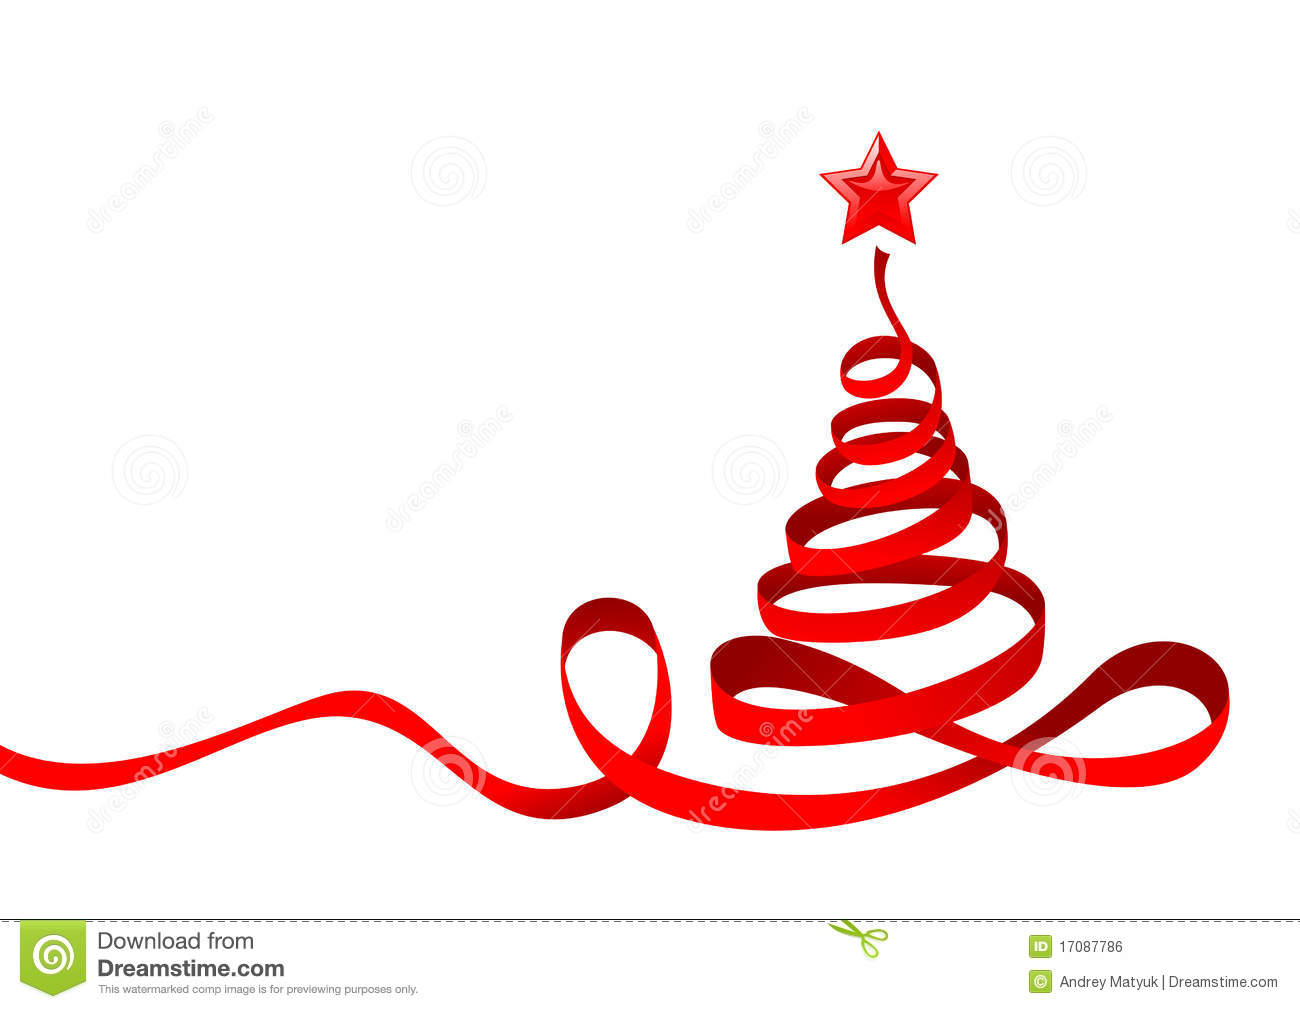 Ribbon Christmas Tree Royalty Free Stock Image   Image  17087786